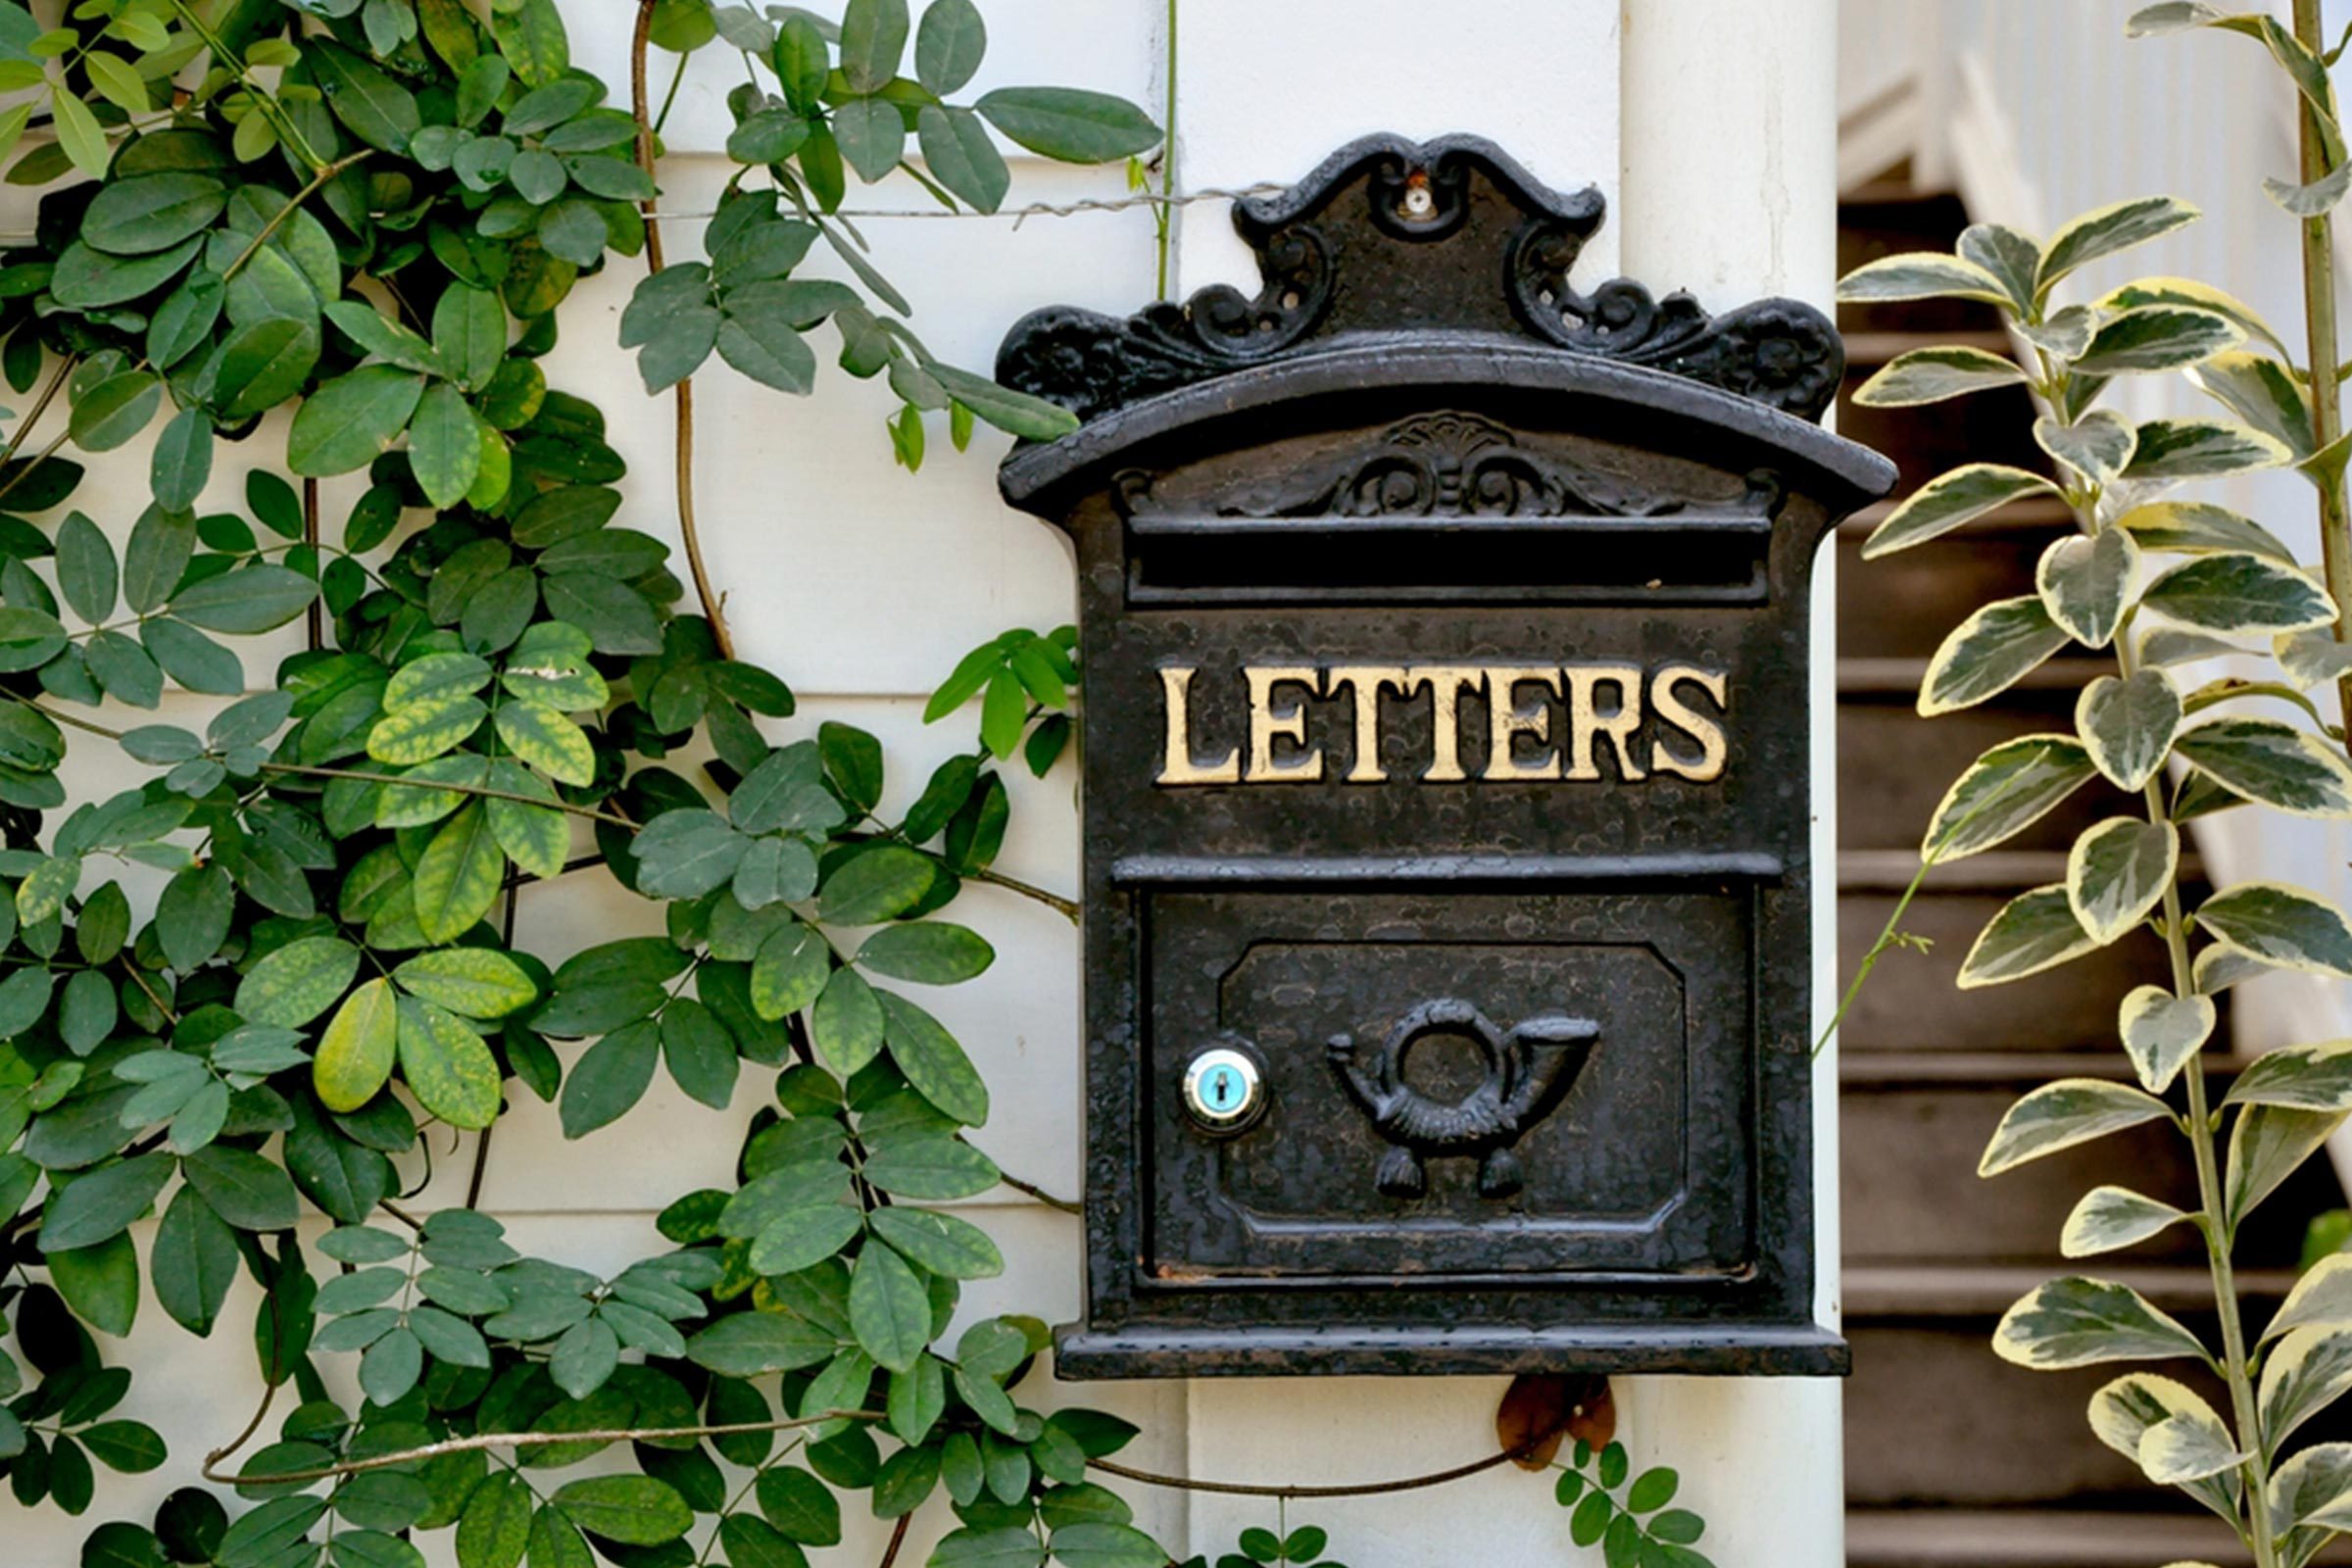 letters mailbox plants